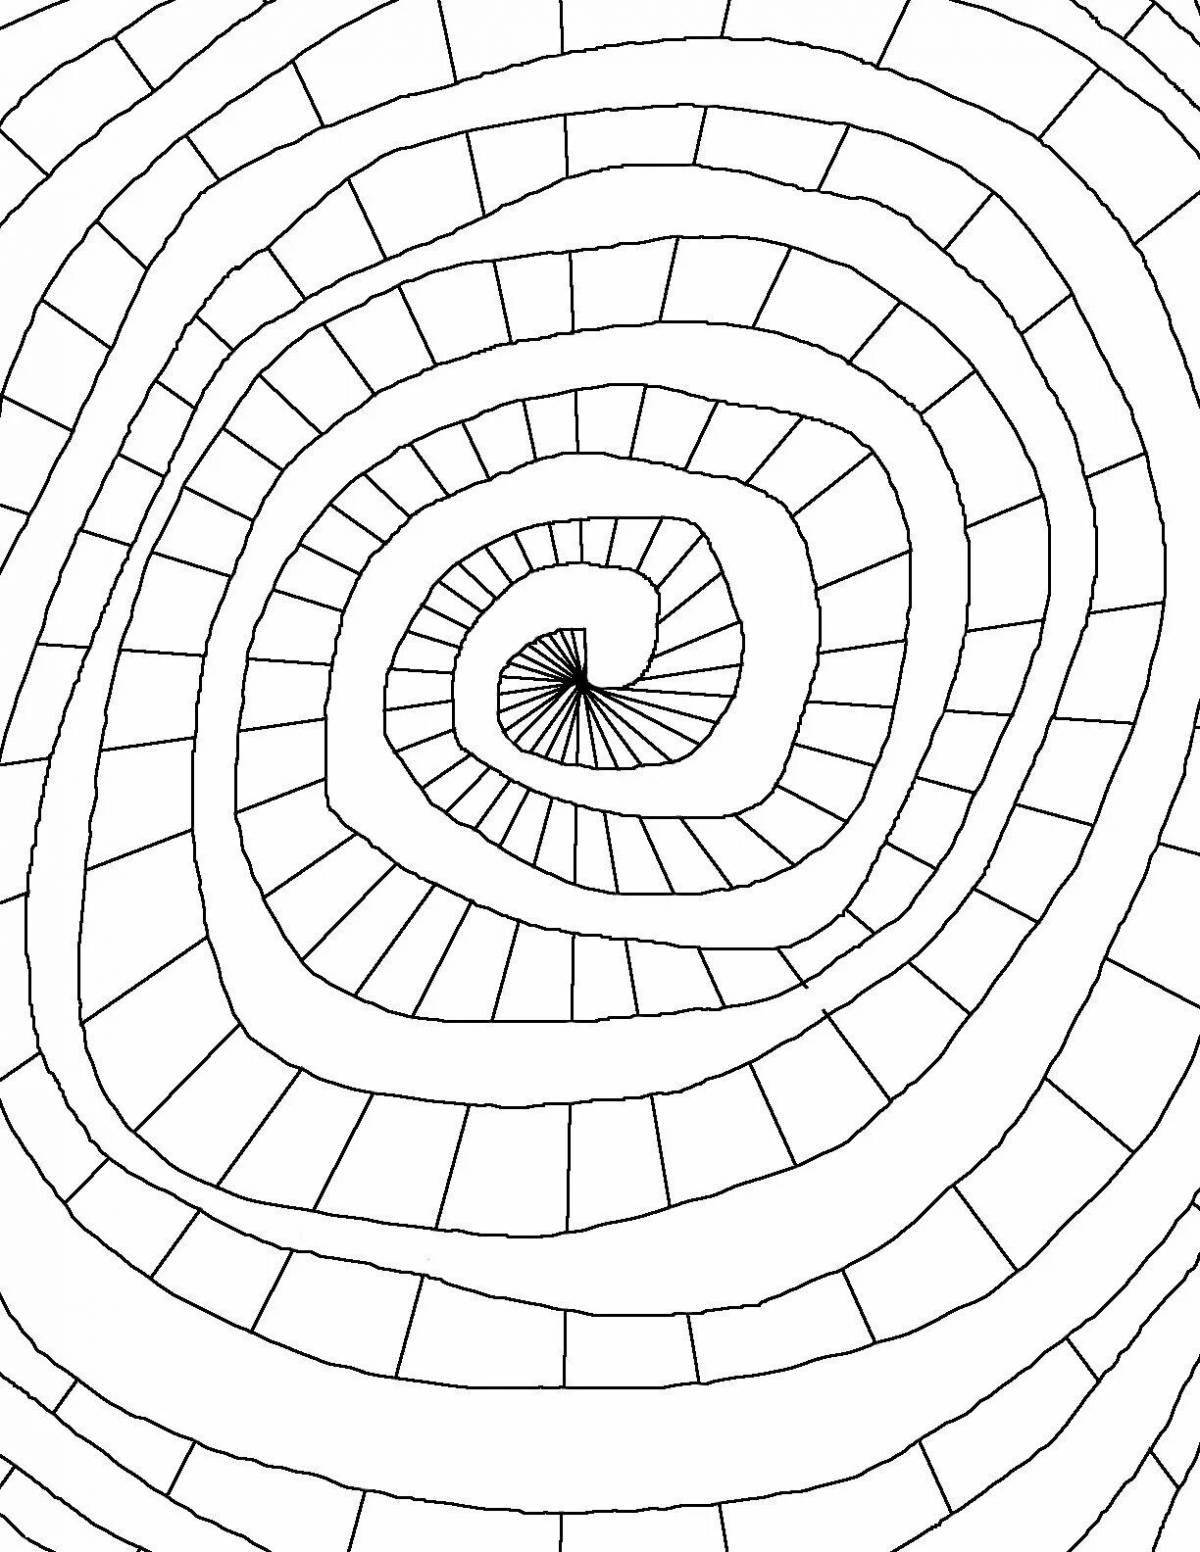 Harry Potter's mesmerizing circular spiral coloring book